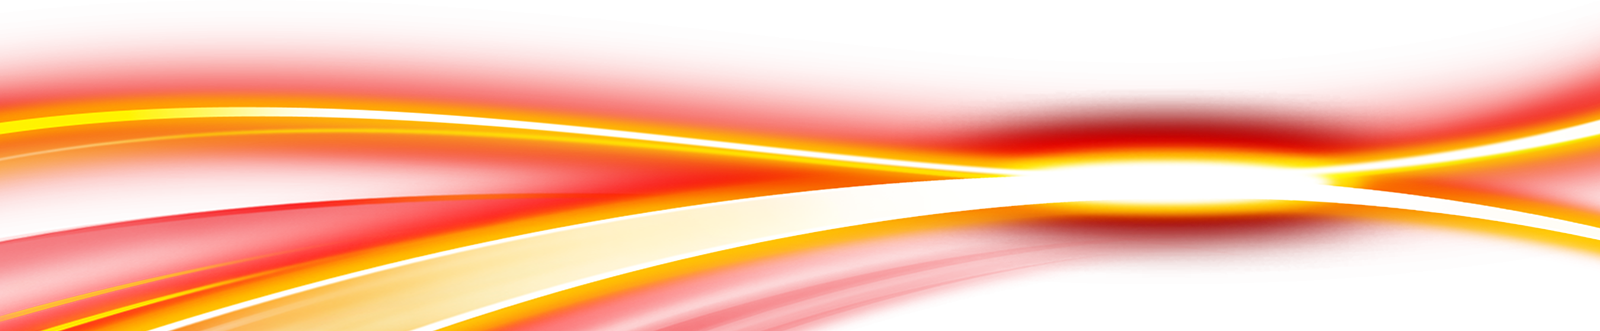 Yellow Light Beam PNG Transparent Image